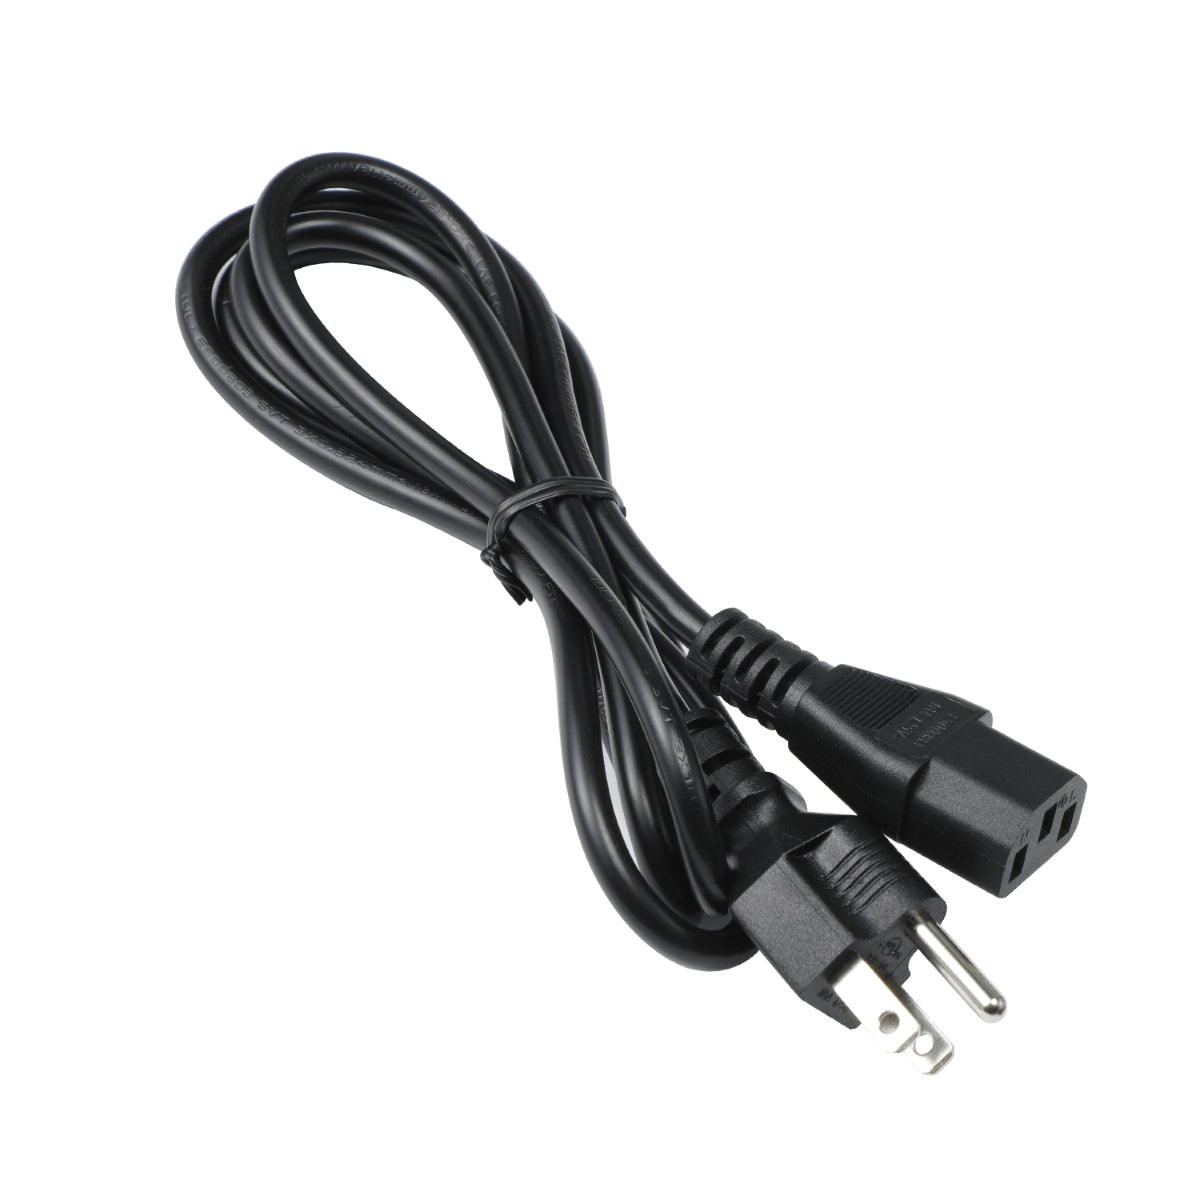 Power Cord for ViewSonic VA2259-smh Monitor